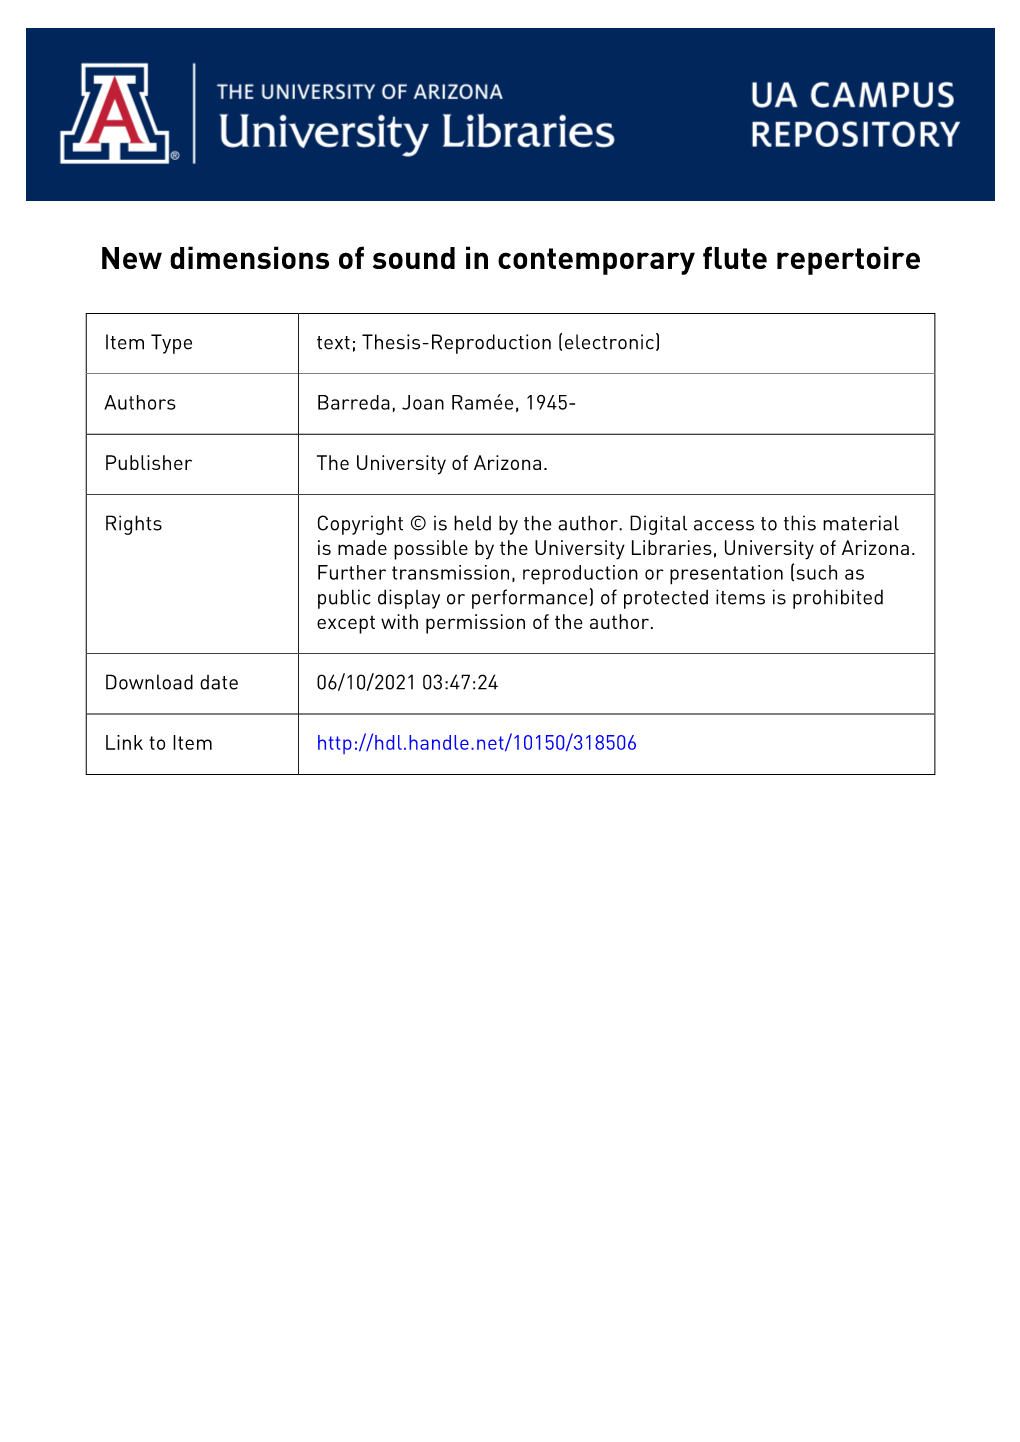 New Dimensions of Sound in Contemporary Flute Repertoire